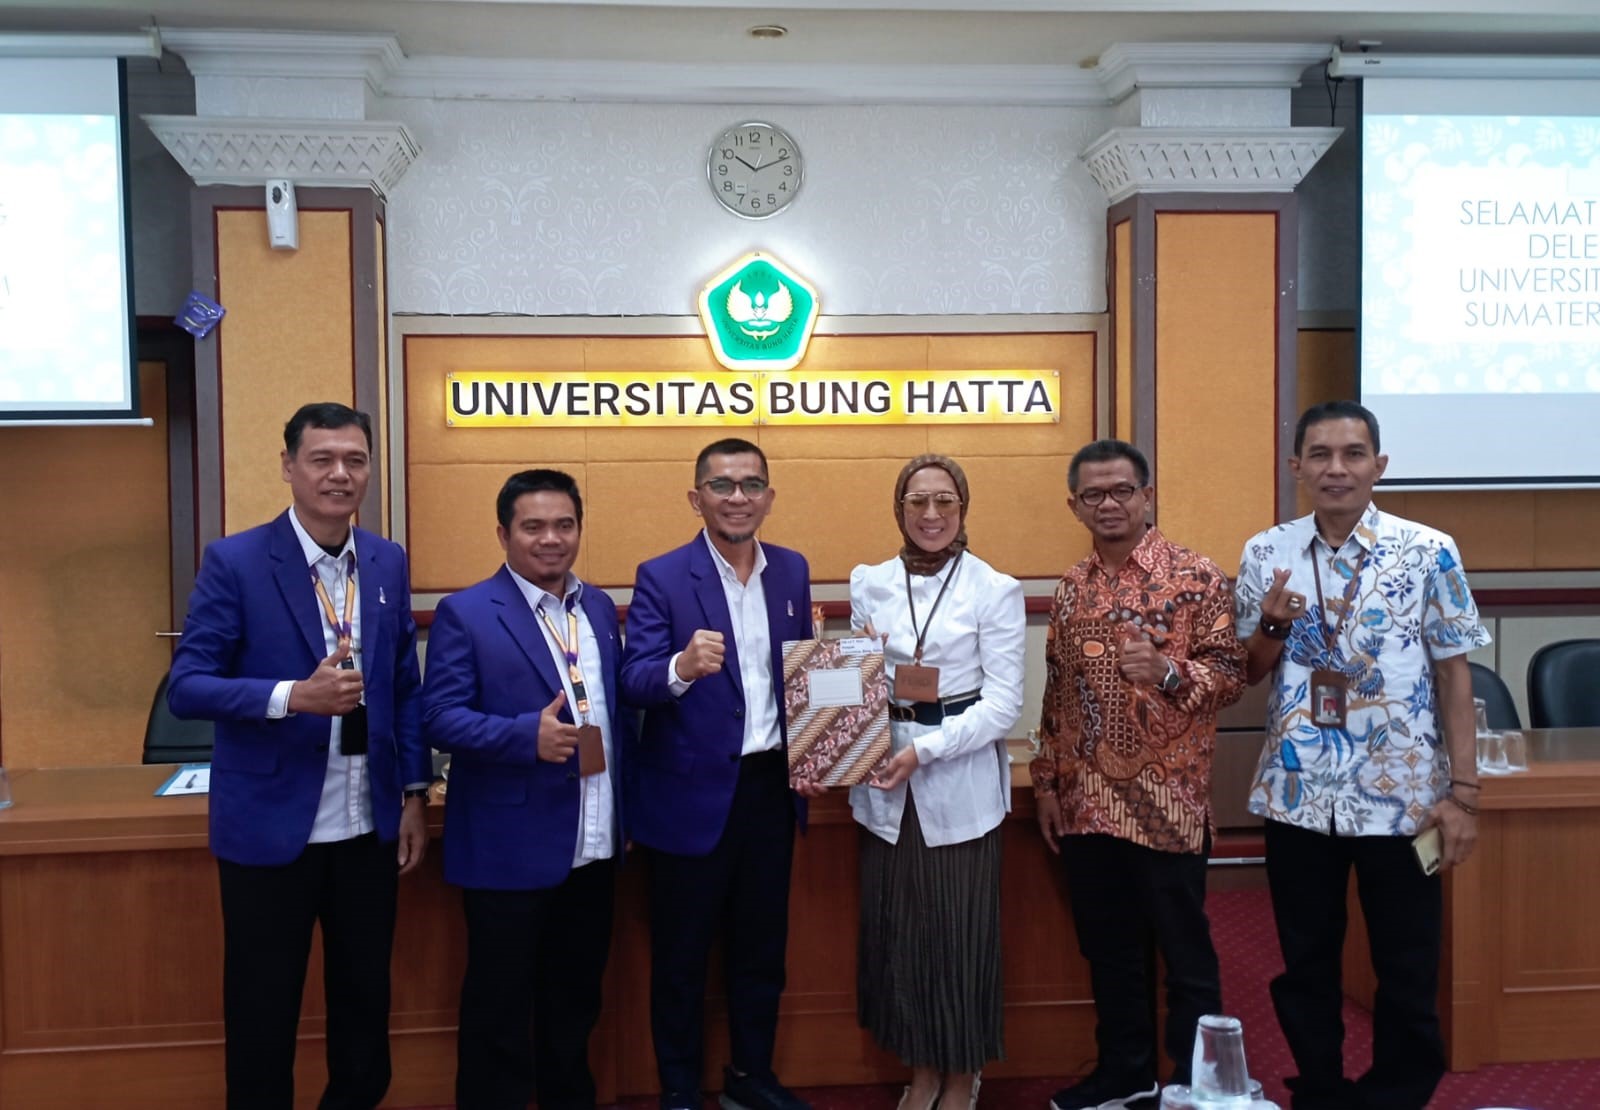 Universitas Islam Sumatera Barat Jajaki Kerjasama dengan Universitas Bung Hatta